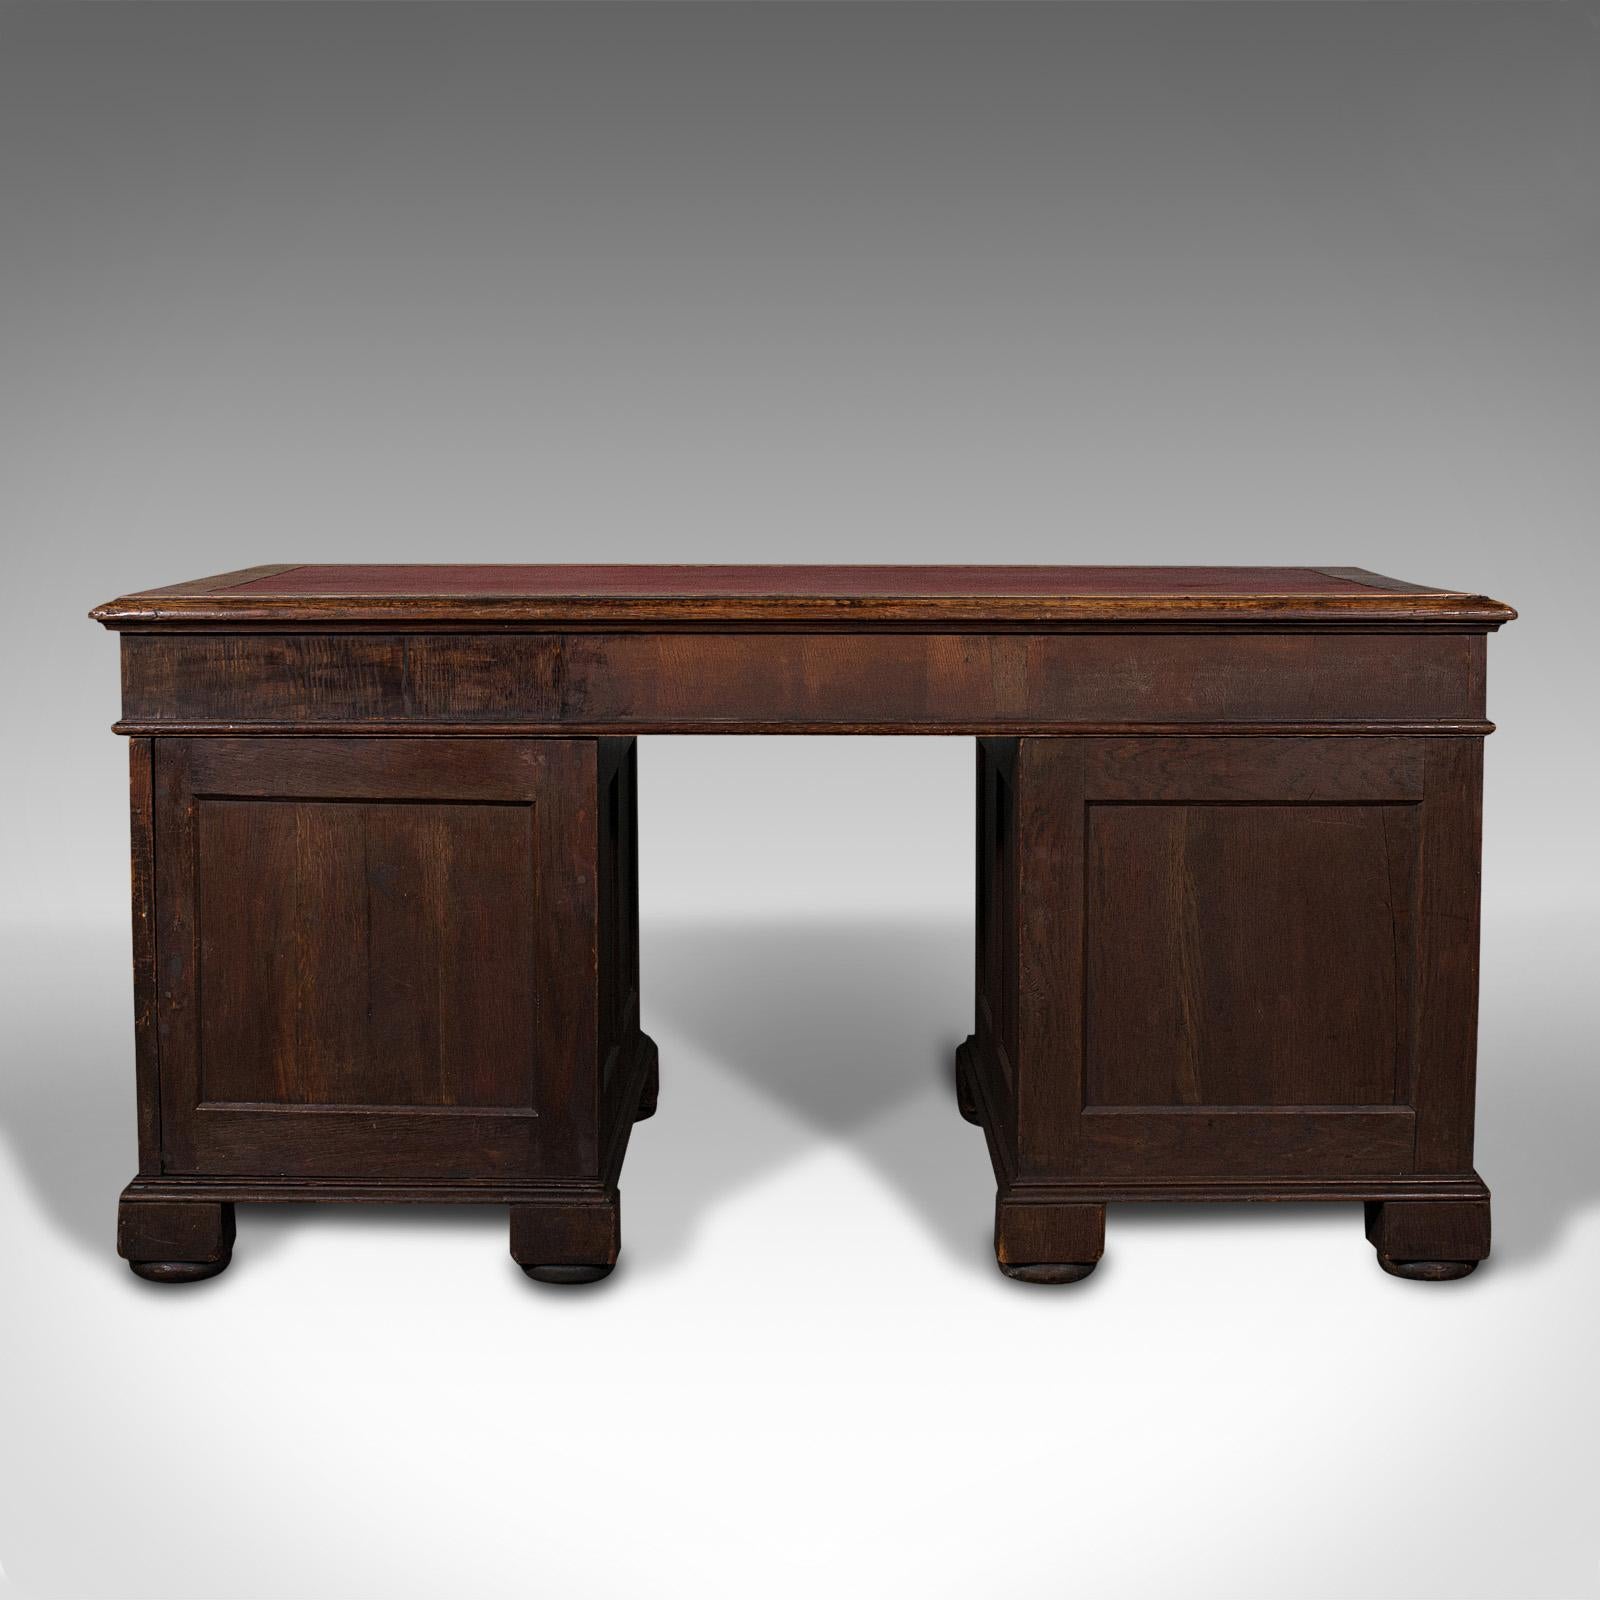 British Large Antique Pedestal Desk, English, Oak, Gothic Revival, Victorian, Circa 1870